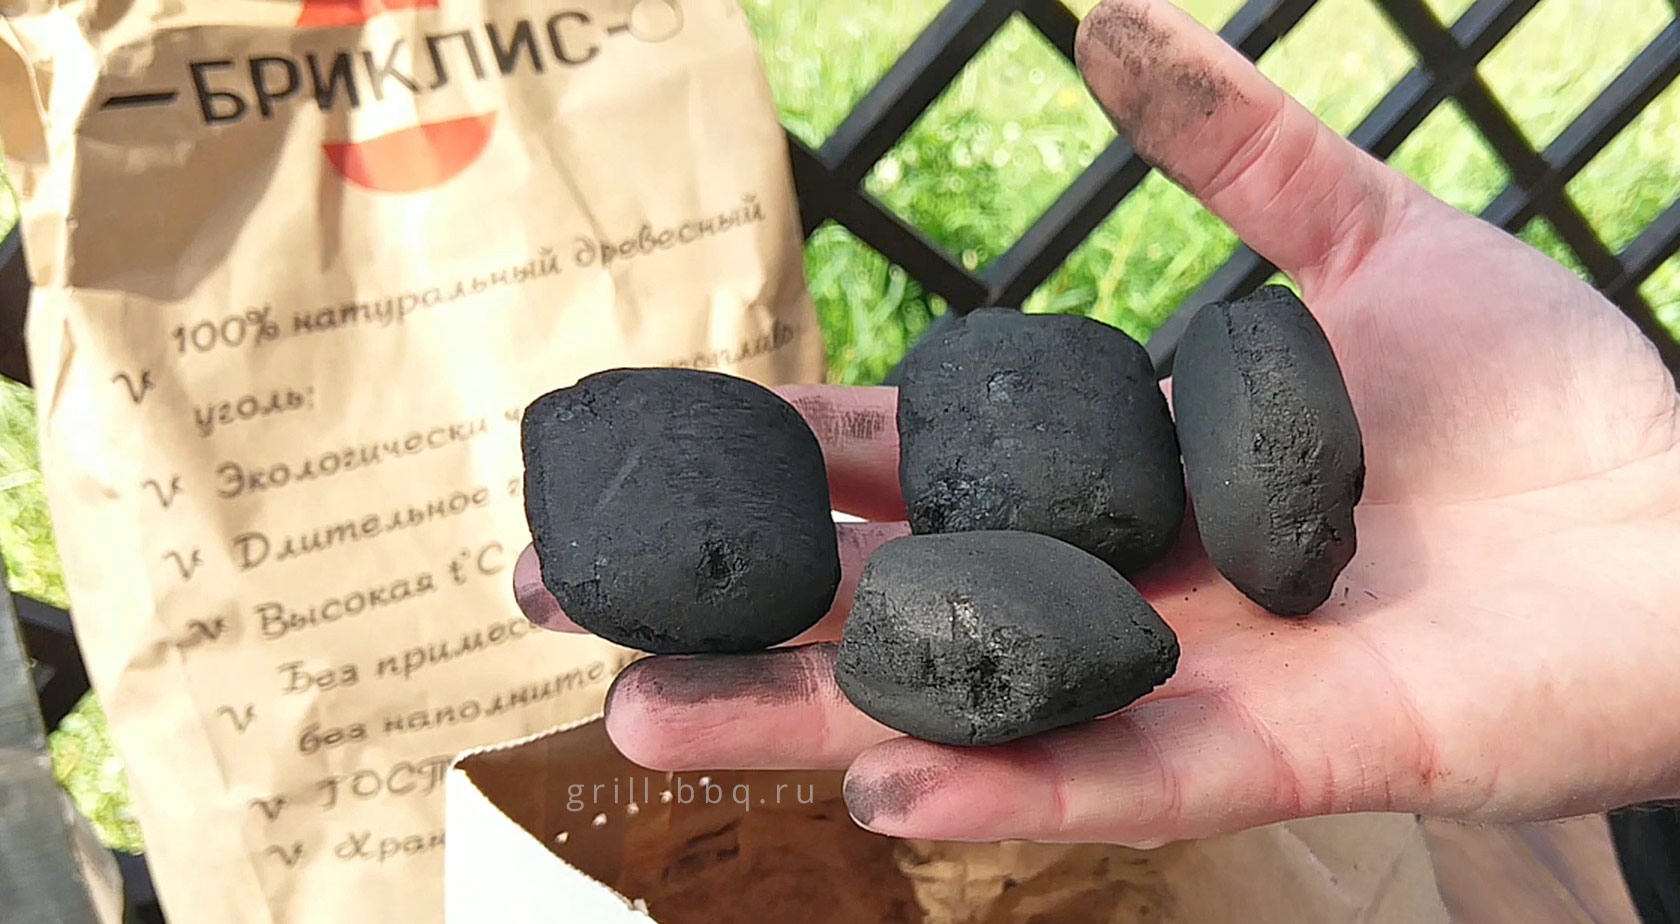 Уголь для шашлыка: каким он должен быть?